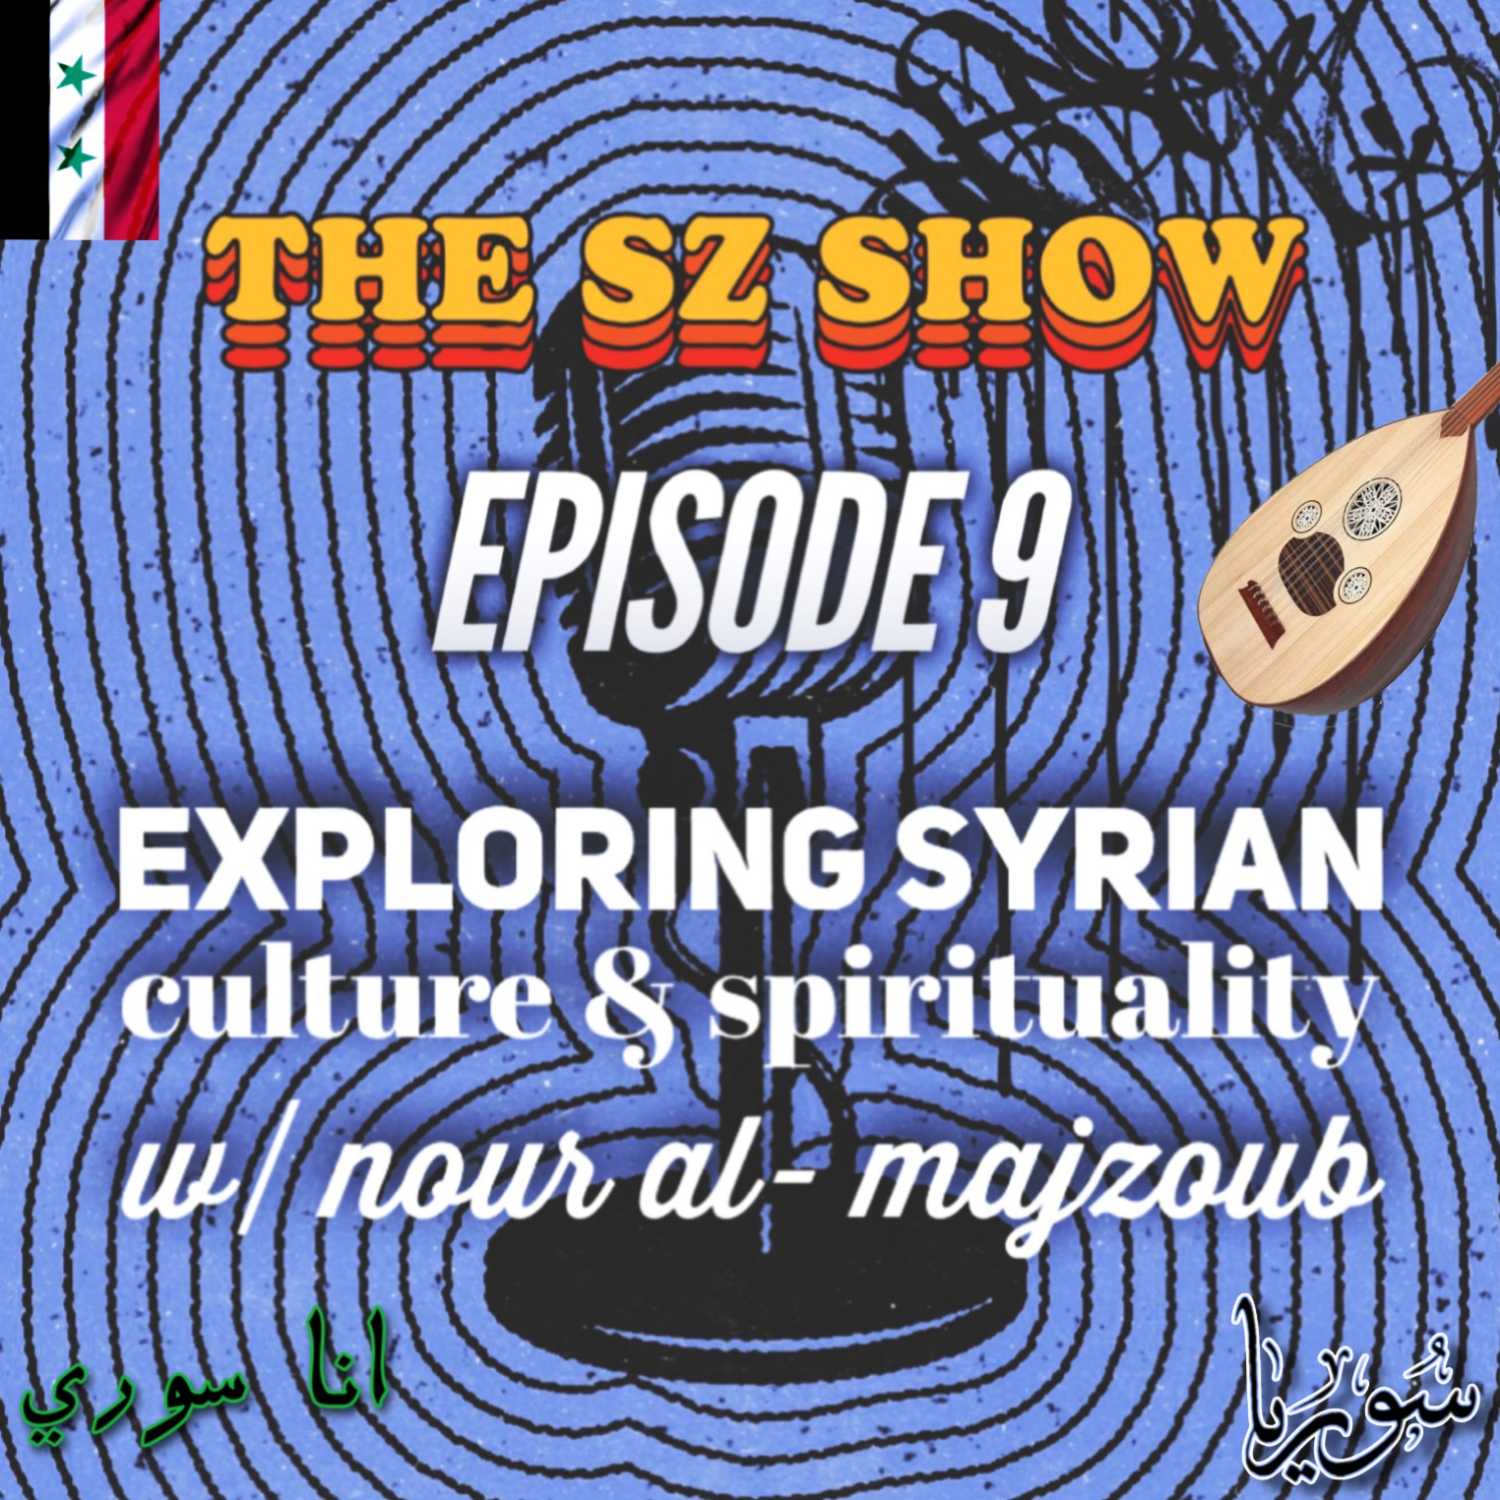 Episode 9: Exploring Syrian Culture & Spirituality w/ Nour Al-Majzoub